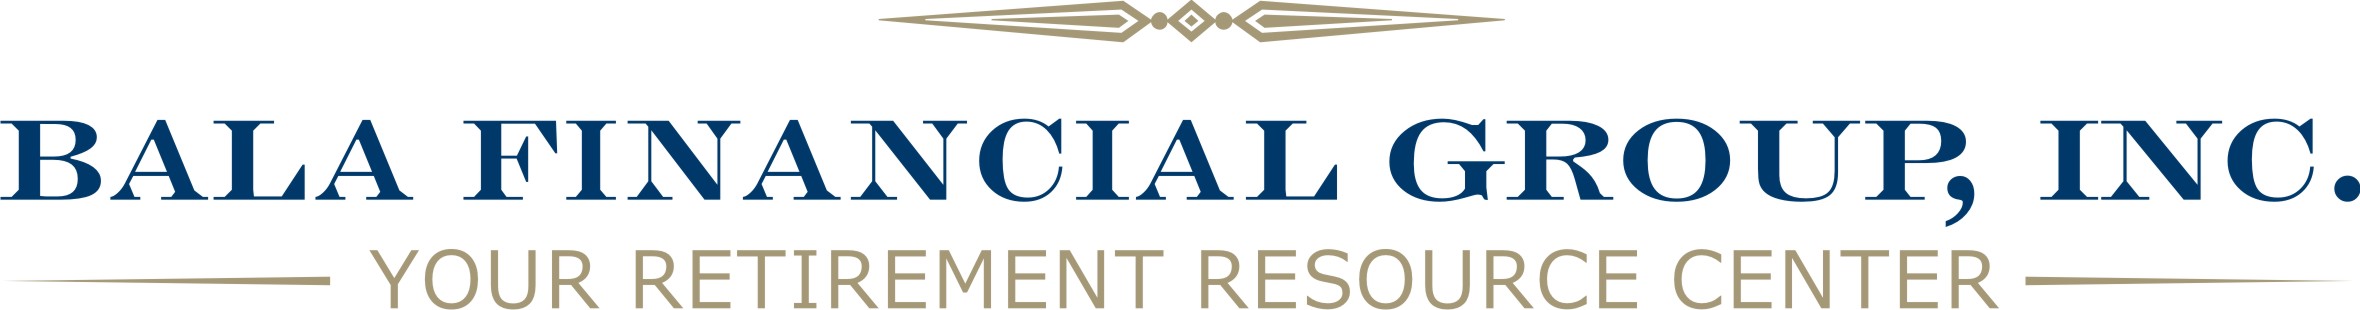 Bala Financial Group